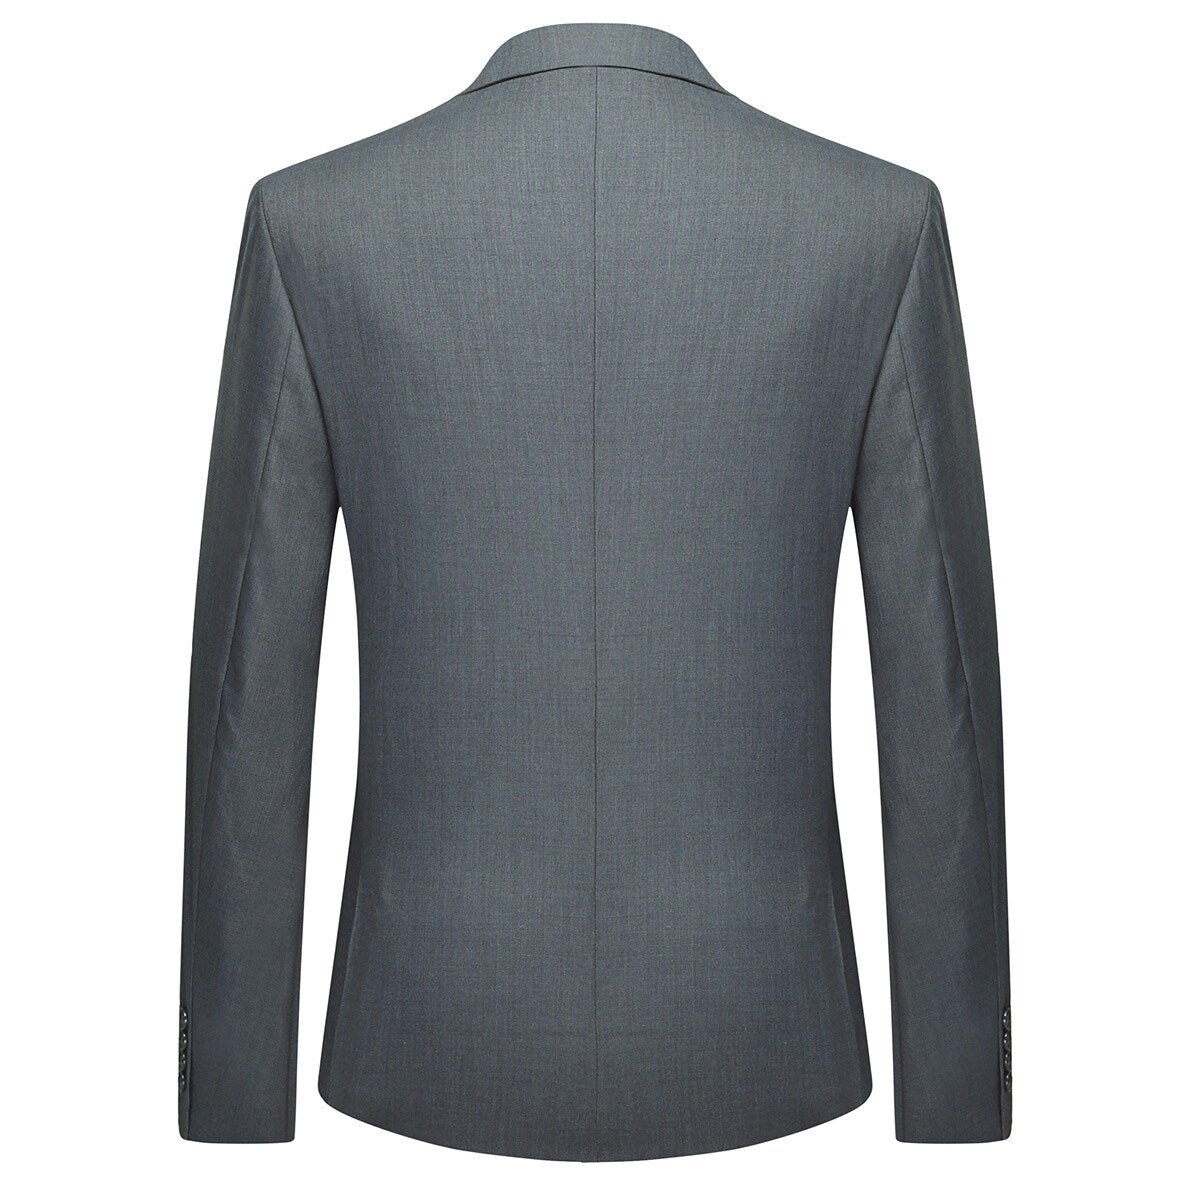 3-Piece One Button Formal Suit Dark Grey Suit